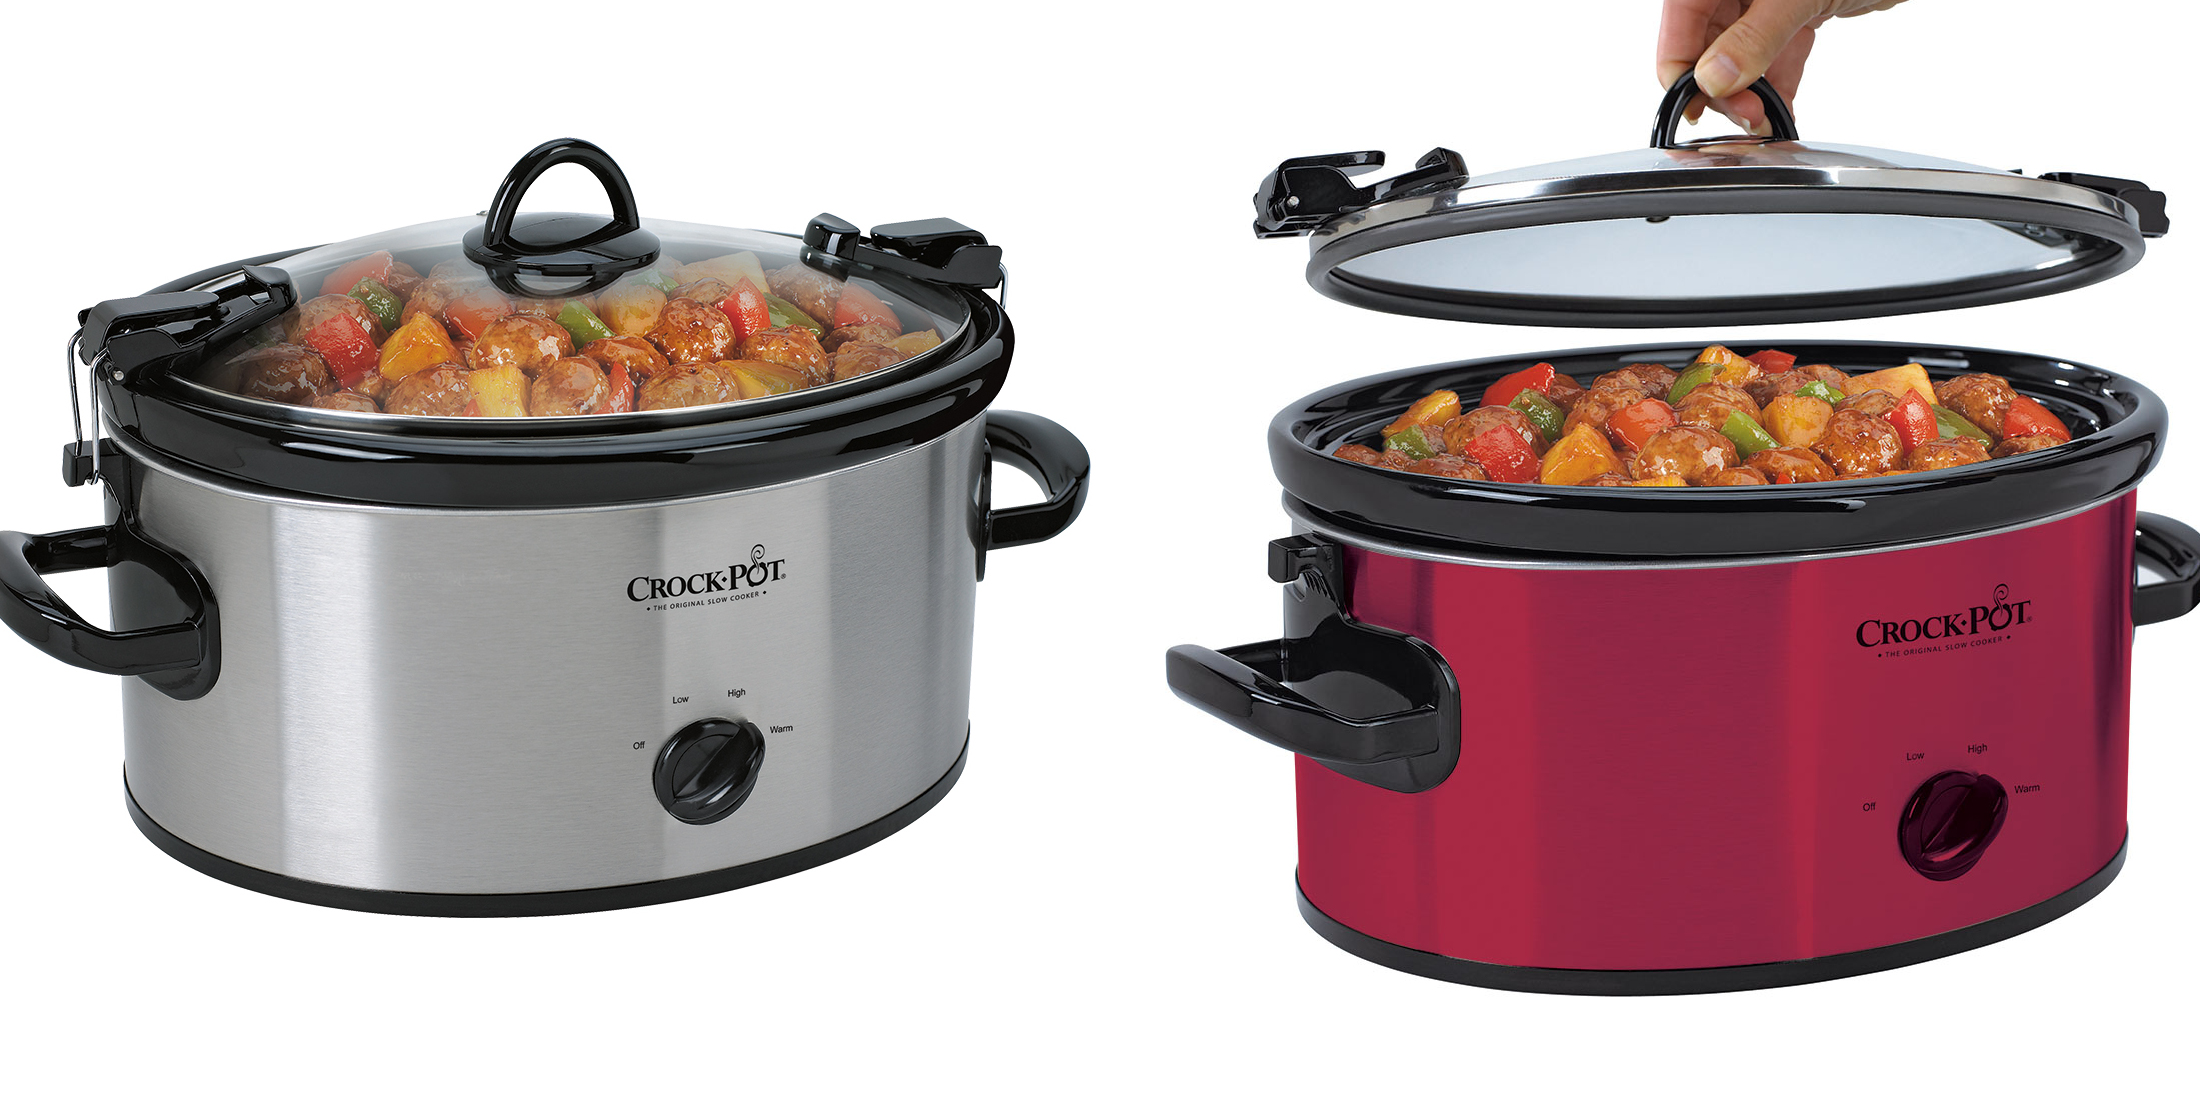 https://9to5toys.com/wp-content/uploads/sites/5/2016/03/crock-pot-cook_-n-carry-6-quart-oval-manual-portable-slow-cooker-sccpvl600s-1.jpg